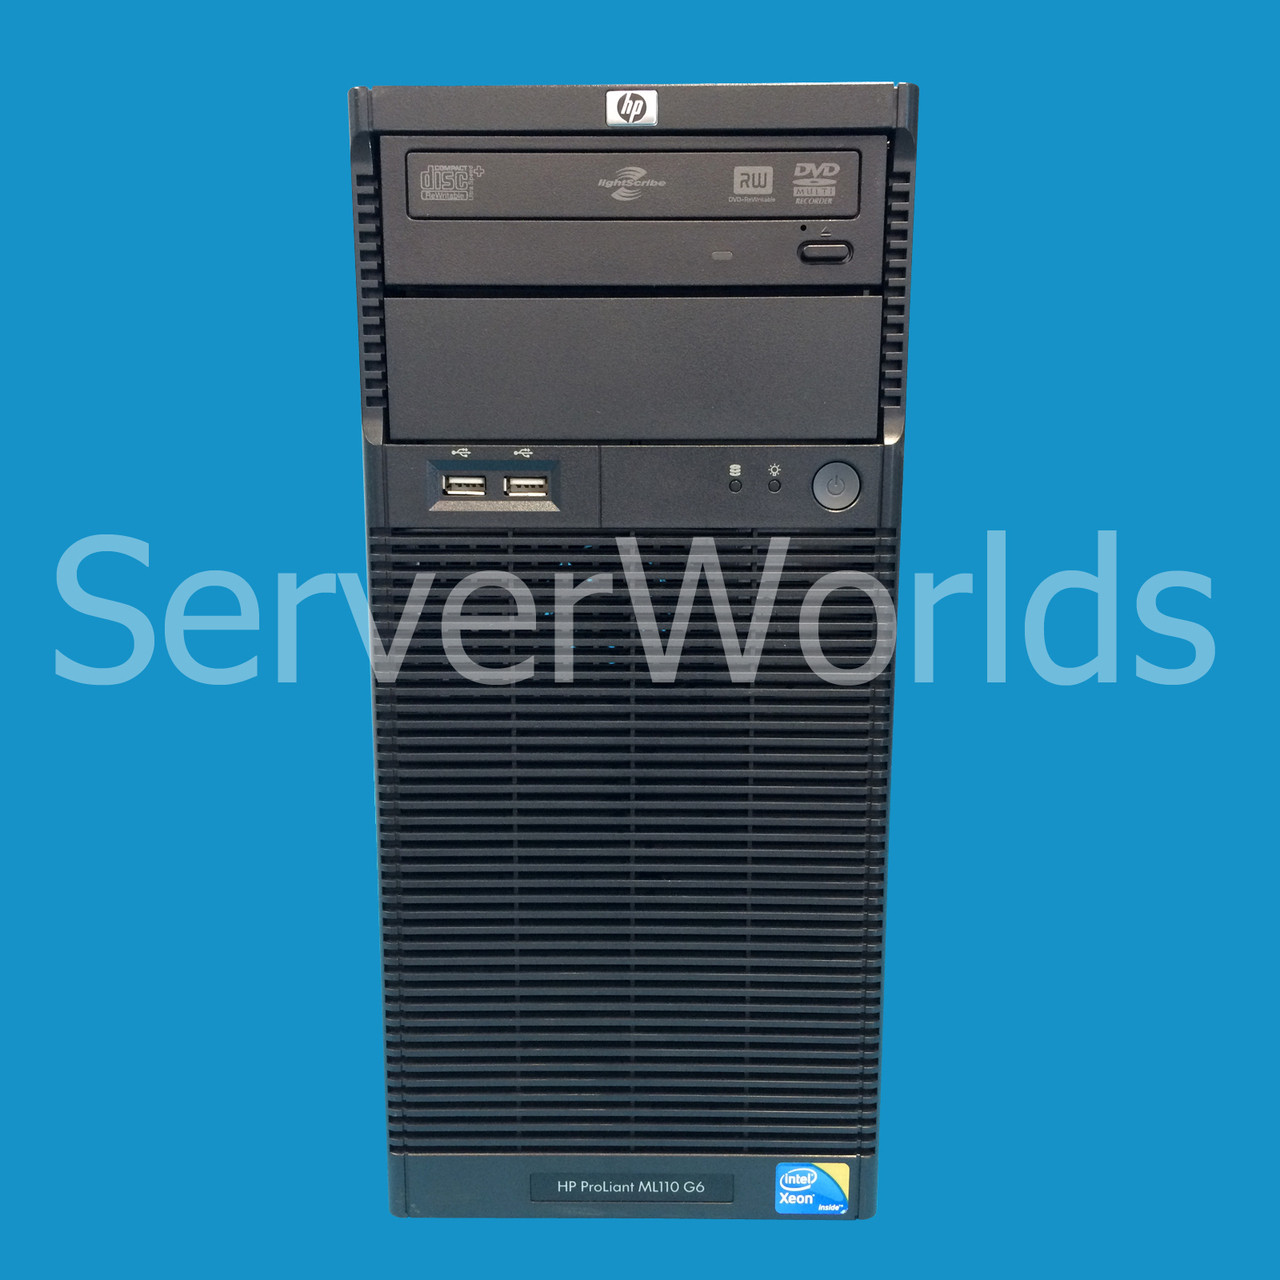 Hp B21 Refurbished Ml110 G6 Server Used Hp Ml110 G6 Server Serverworlds